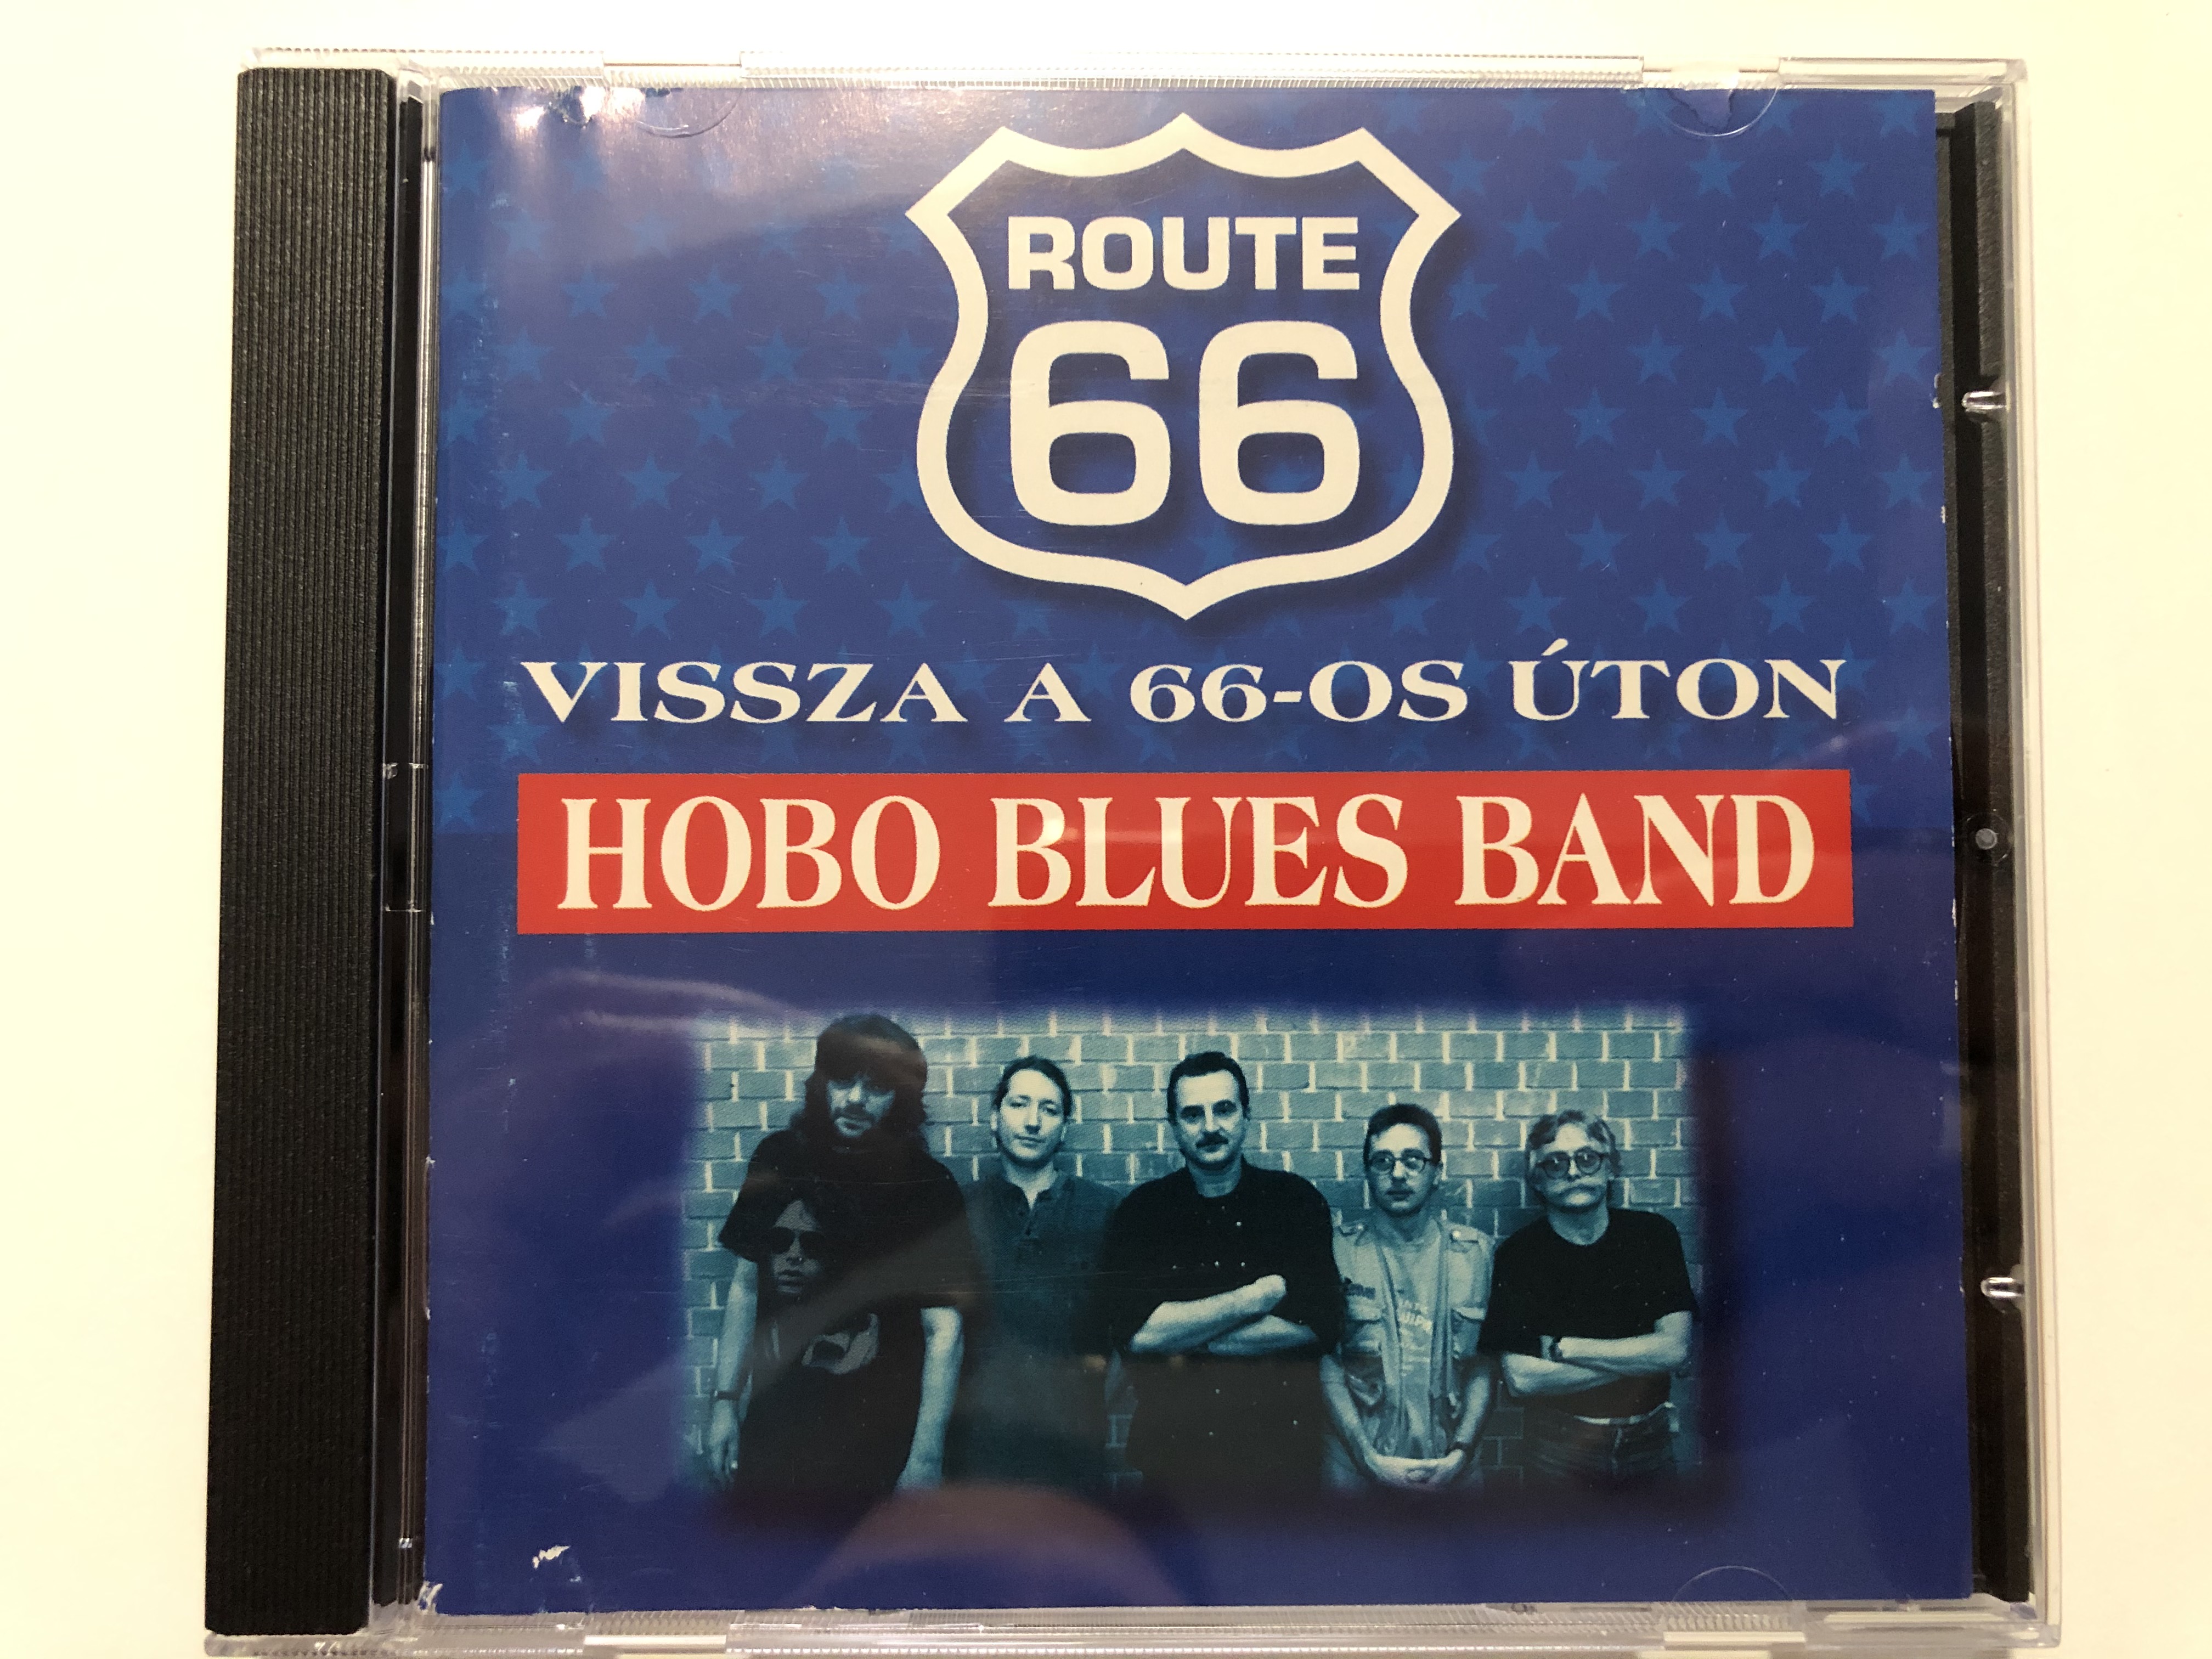 route-66-vissza-a-66-os-ton-hobo-blues-band-magneoton-audio-cd-1995-0630-13014-2-1-.jpg